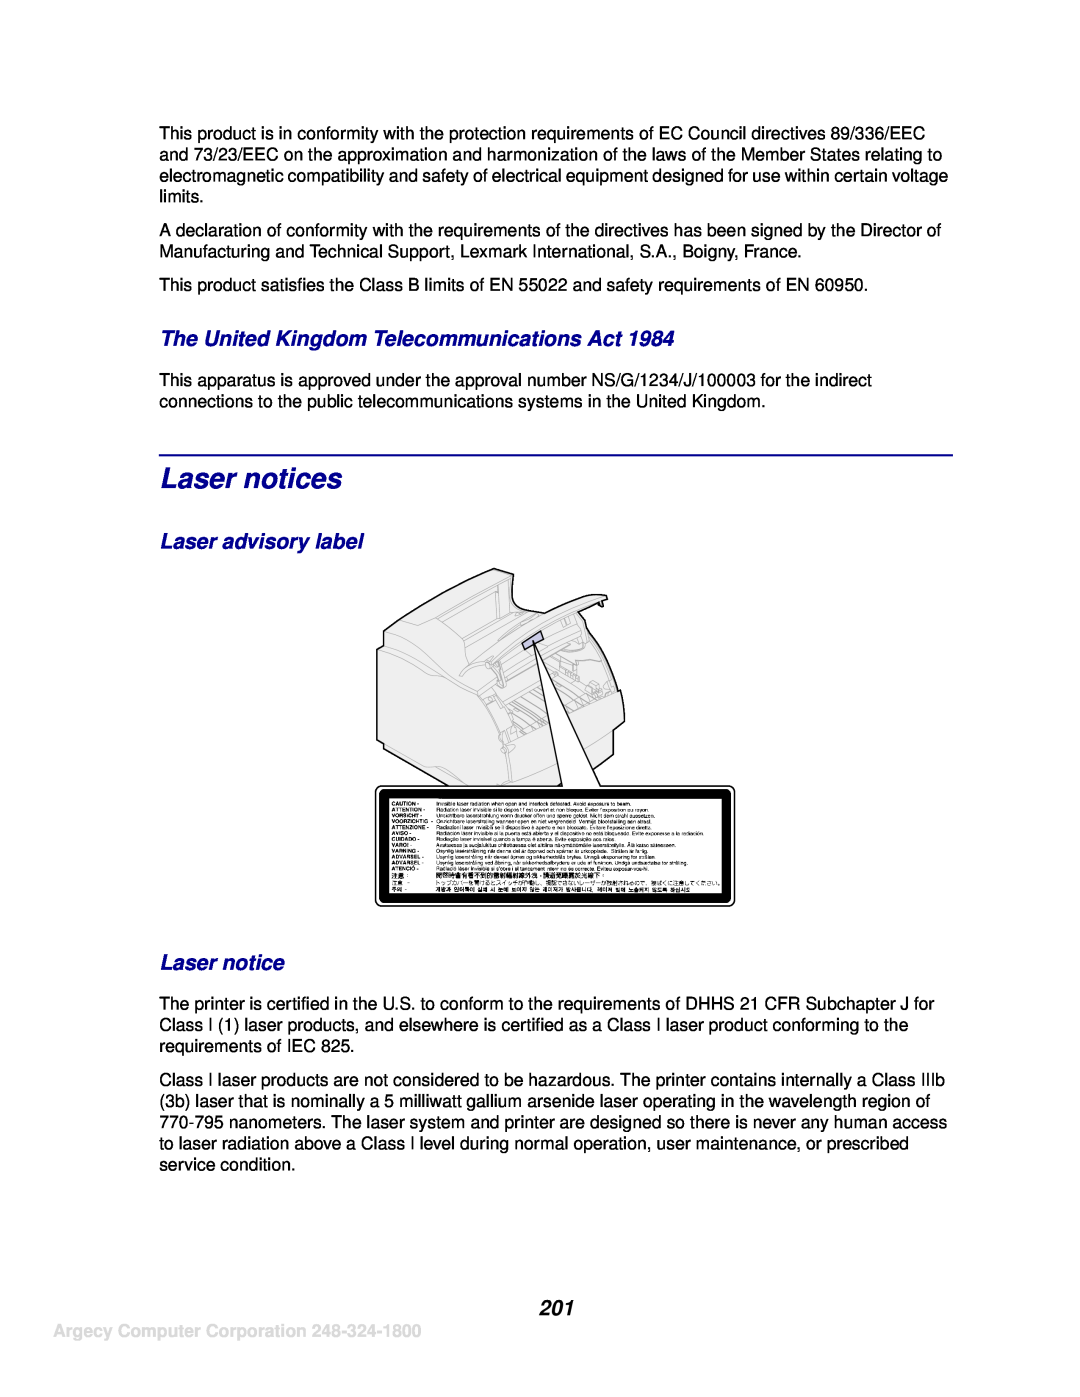 IBM 1120, 1125 manual Laser notices, The United Kingdom Telecommunications Act, Laser advisory label Laser notice 